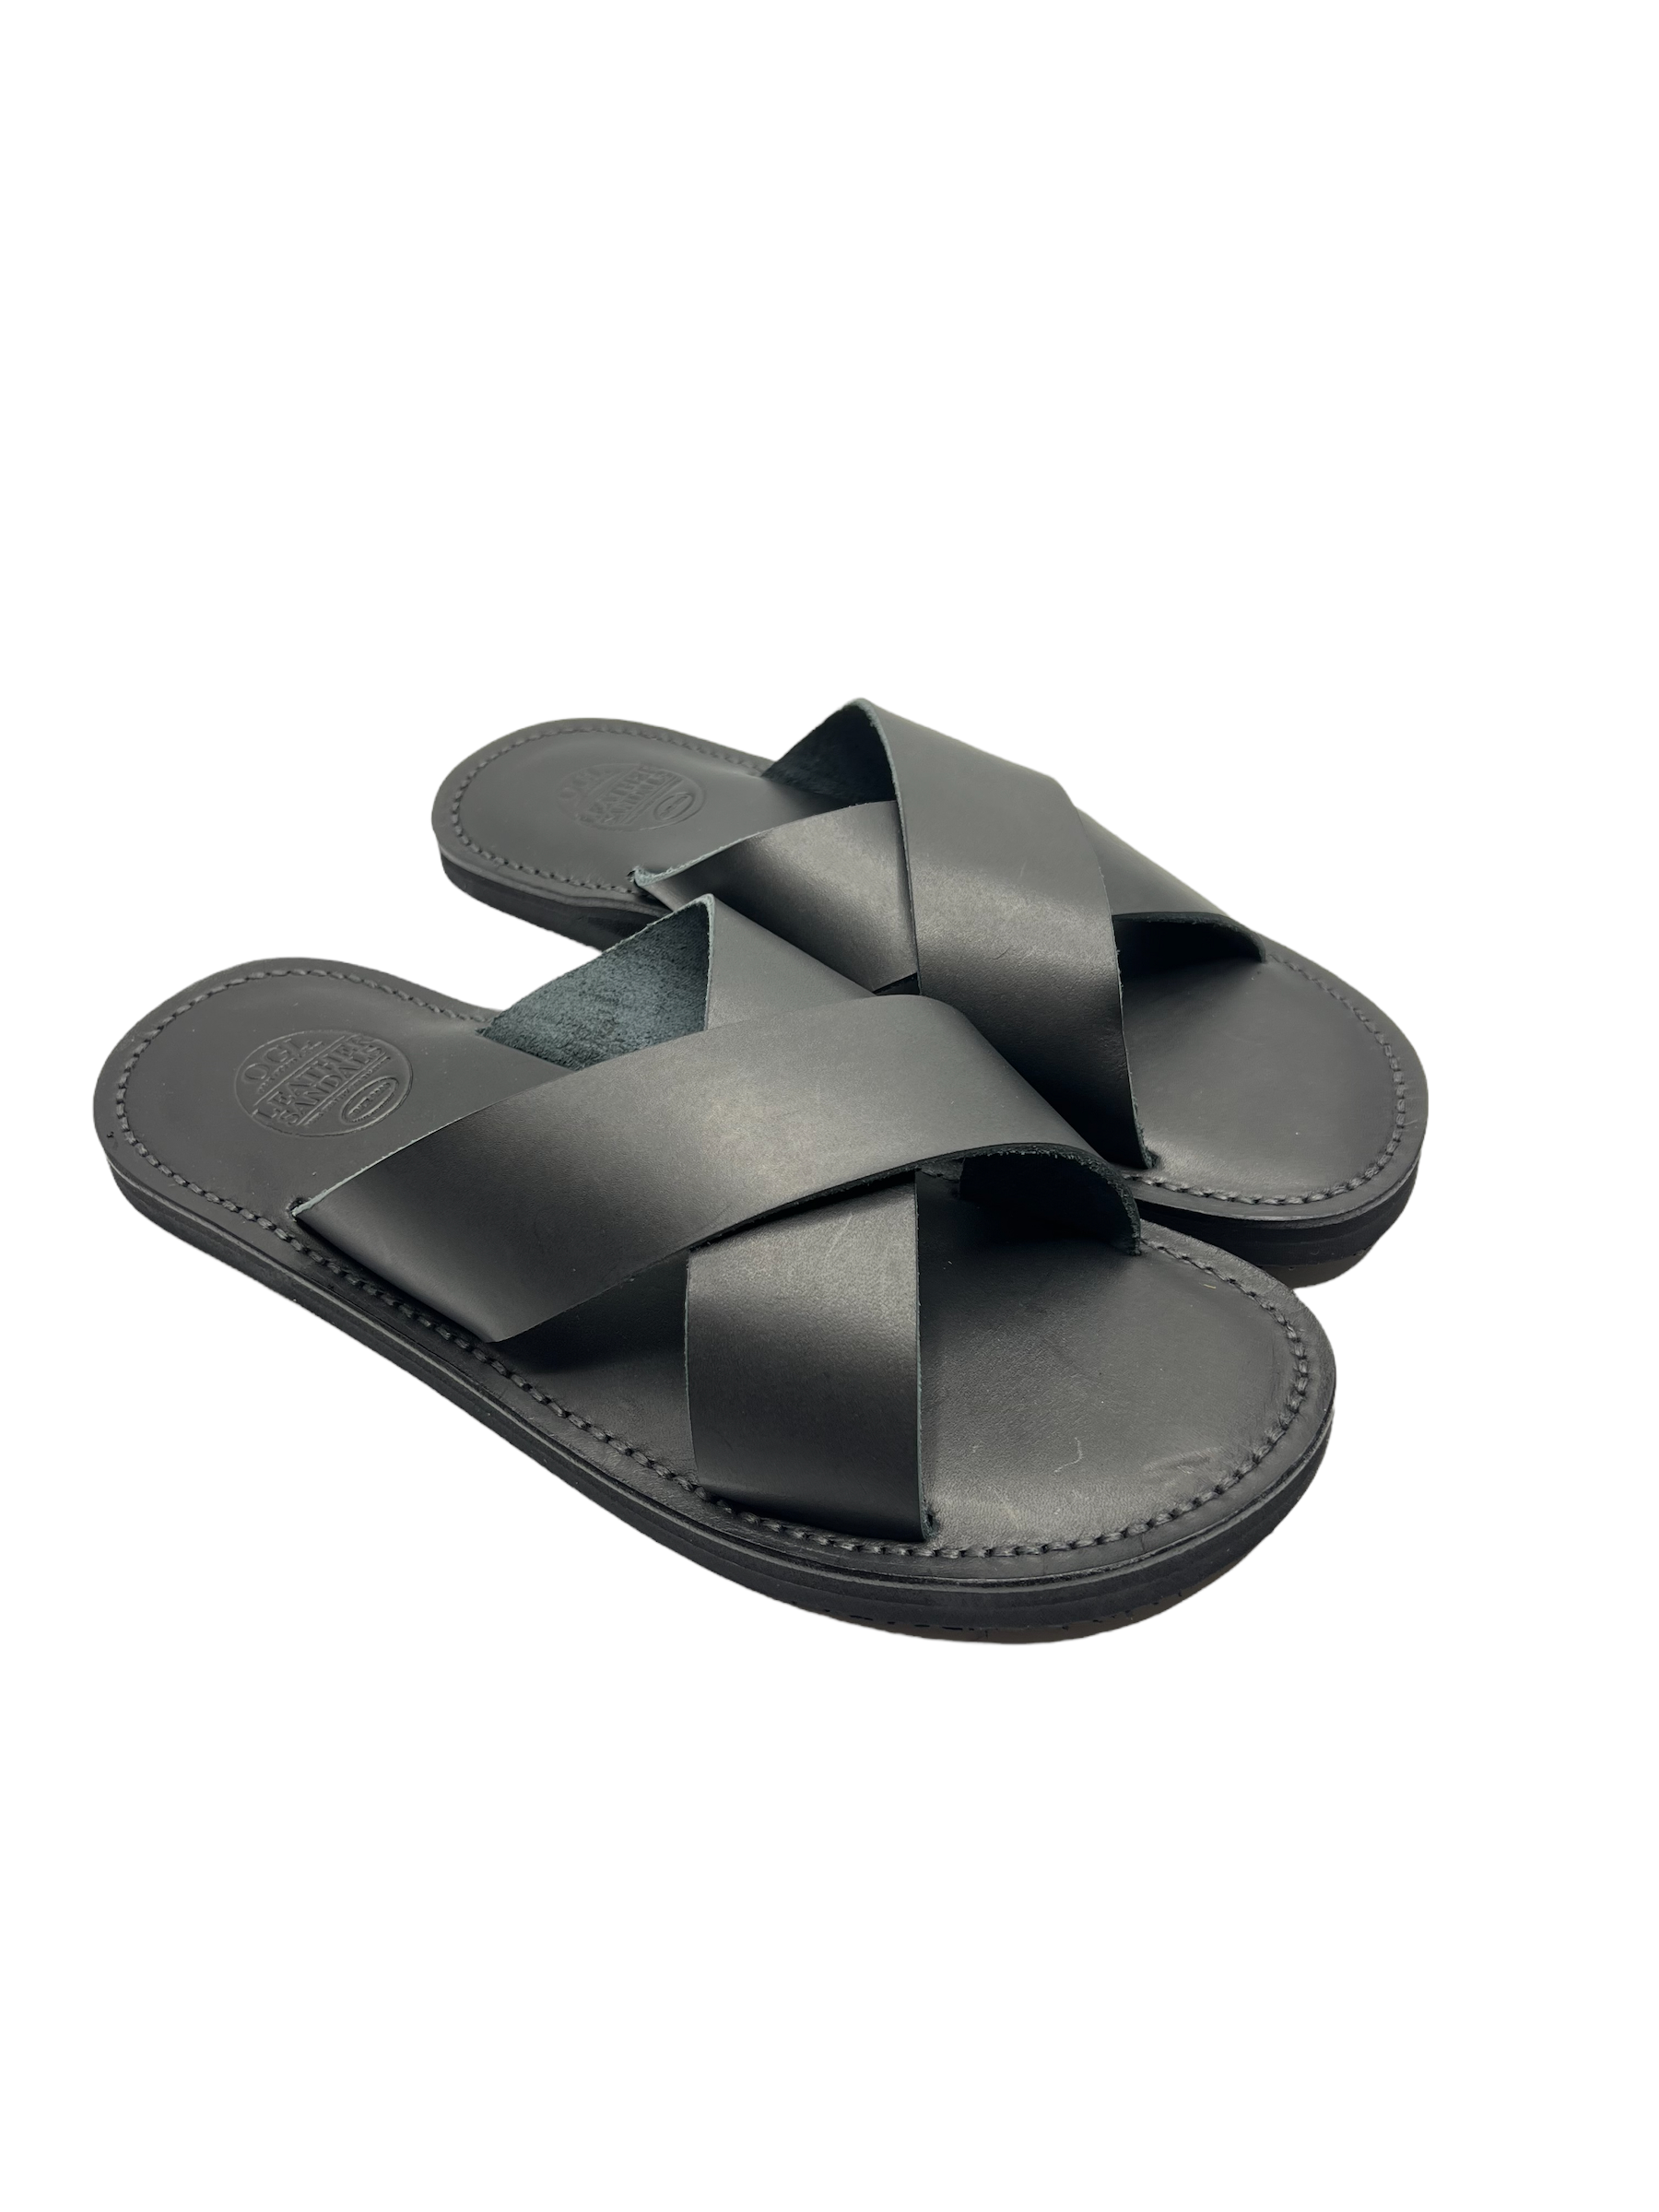 OGL X Dr. Sole Leather Cross Sandals - Black ONLINE ONLY! - Pinkomo